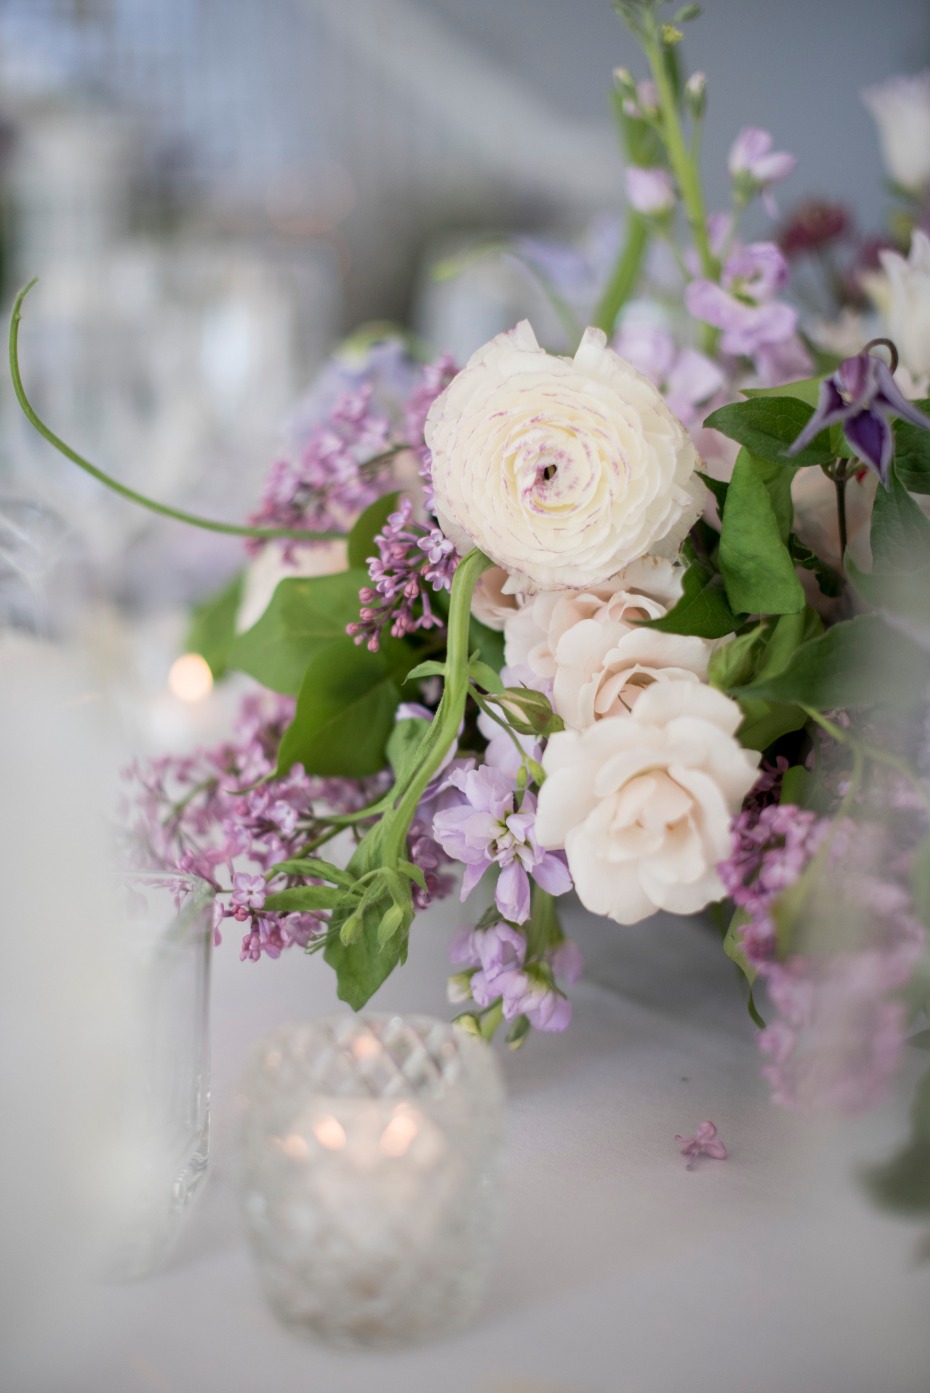 white and purple wedding flowers